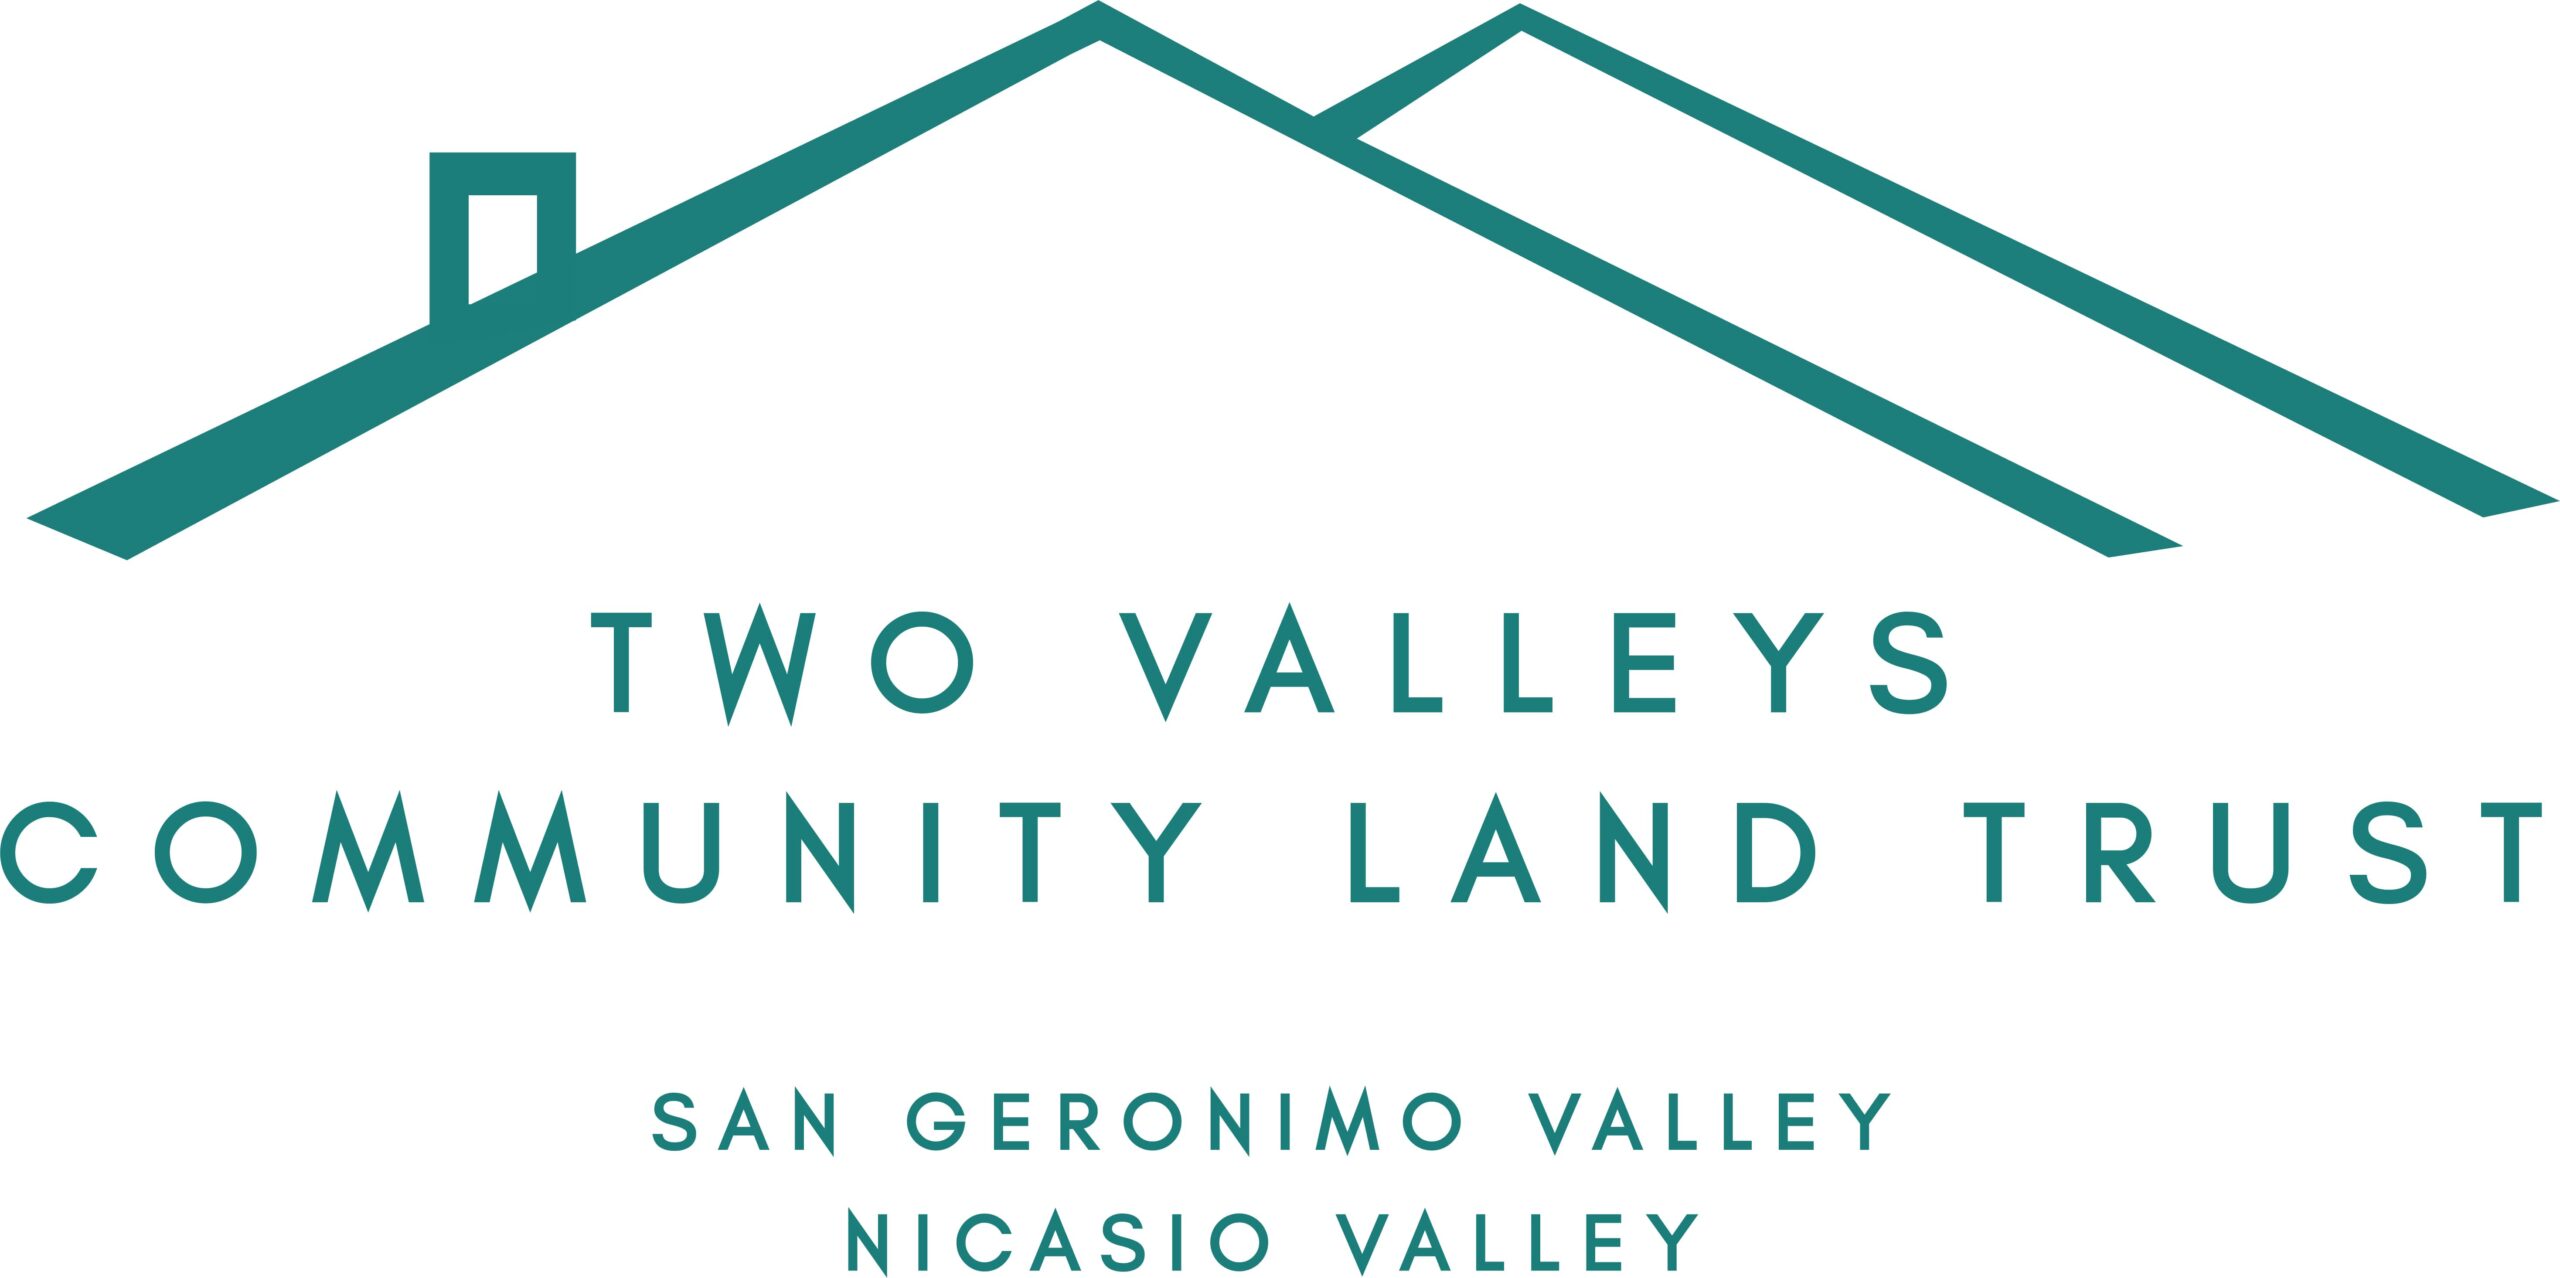 Two Valleys Community Land Trust logo